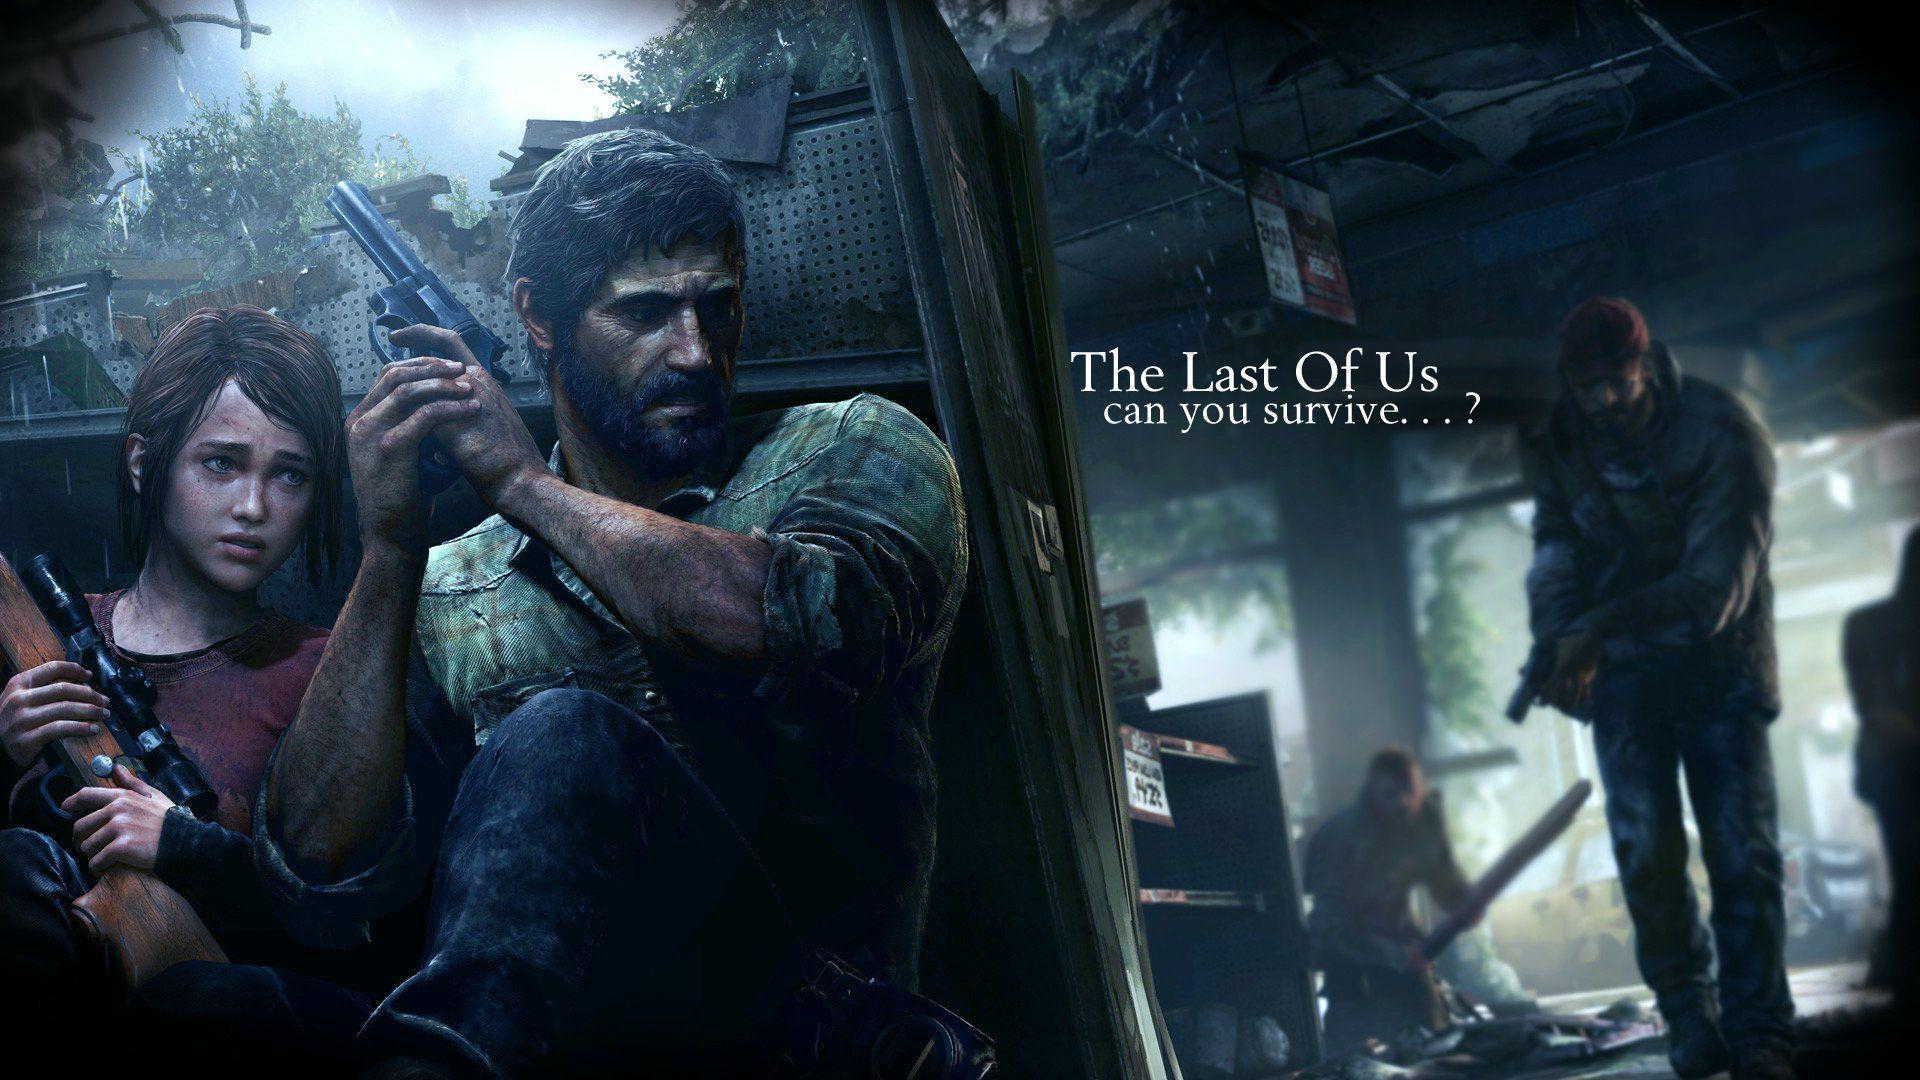 The Last Of Us Wallpaper Hd Hd Wallpaper. The Last Of Us